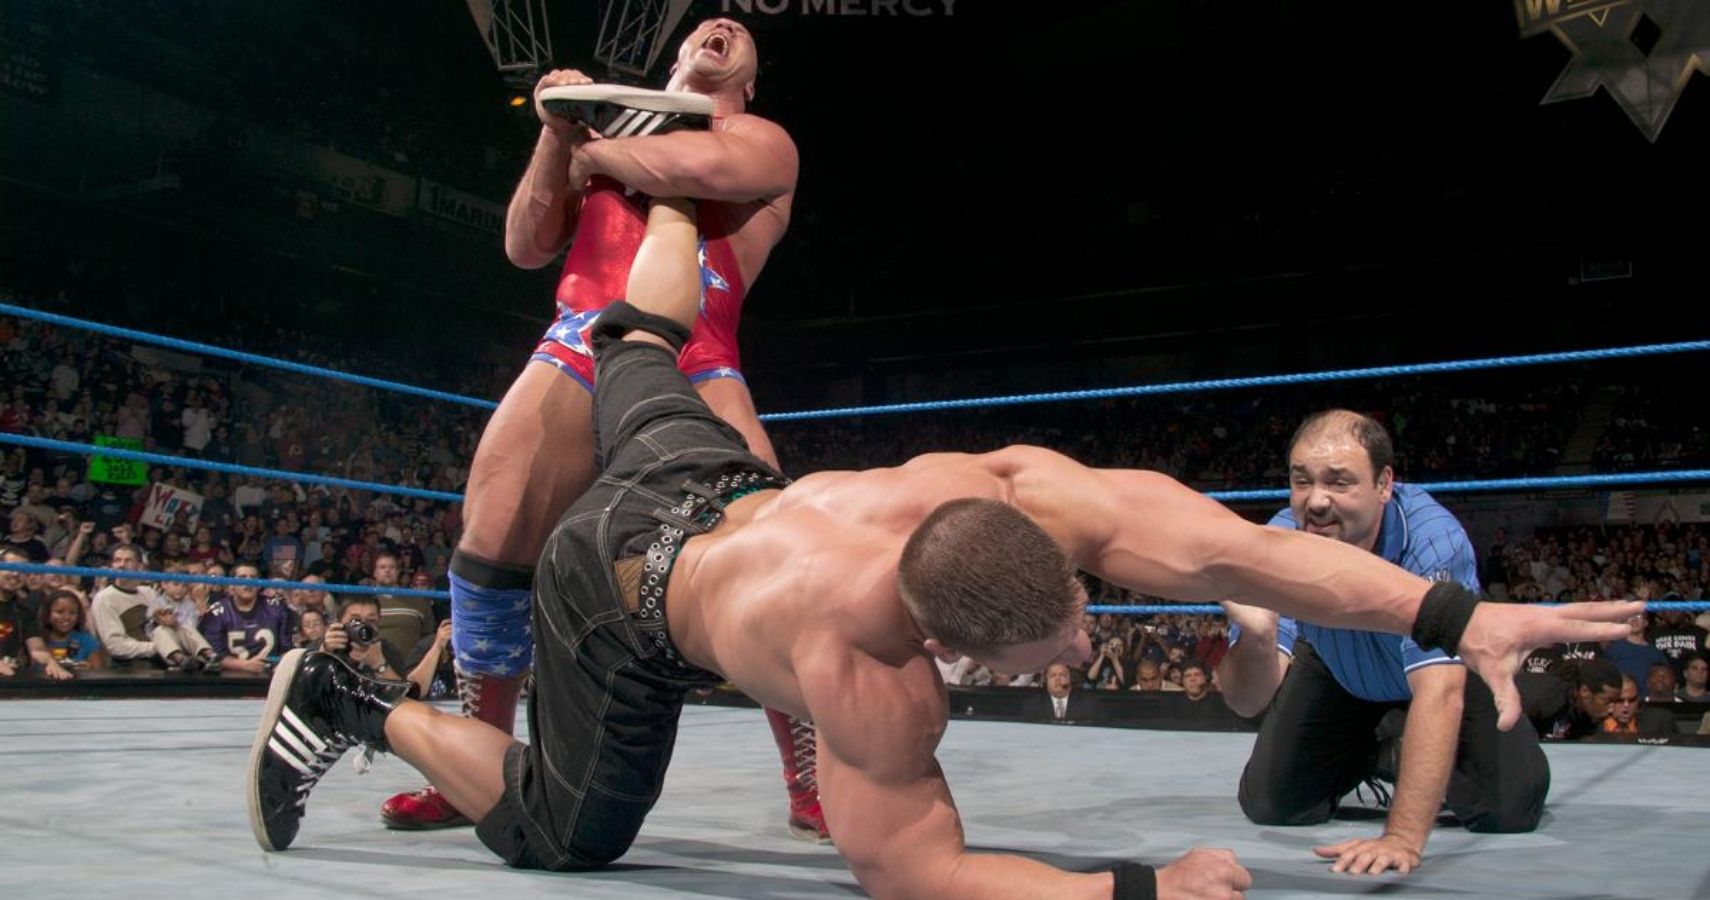 Kurt Angle and John Cena